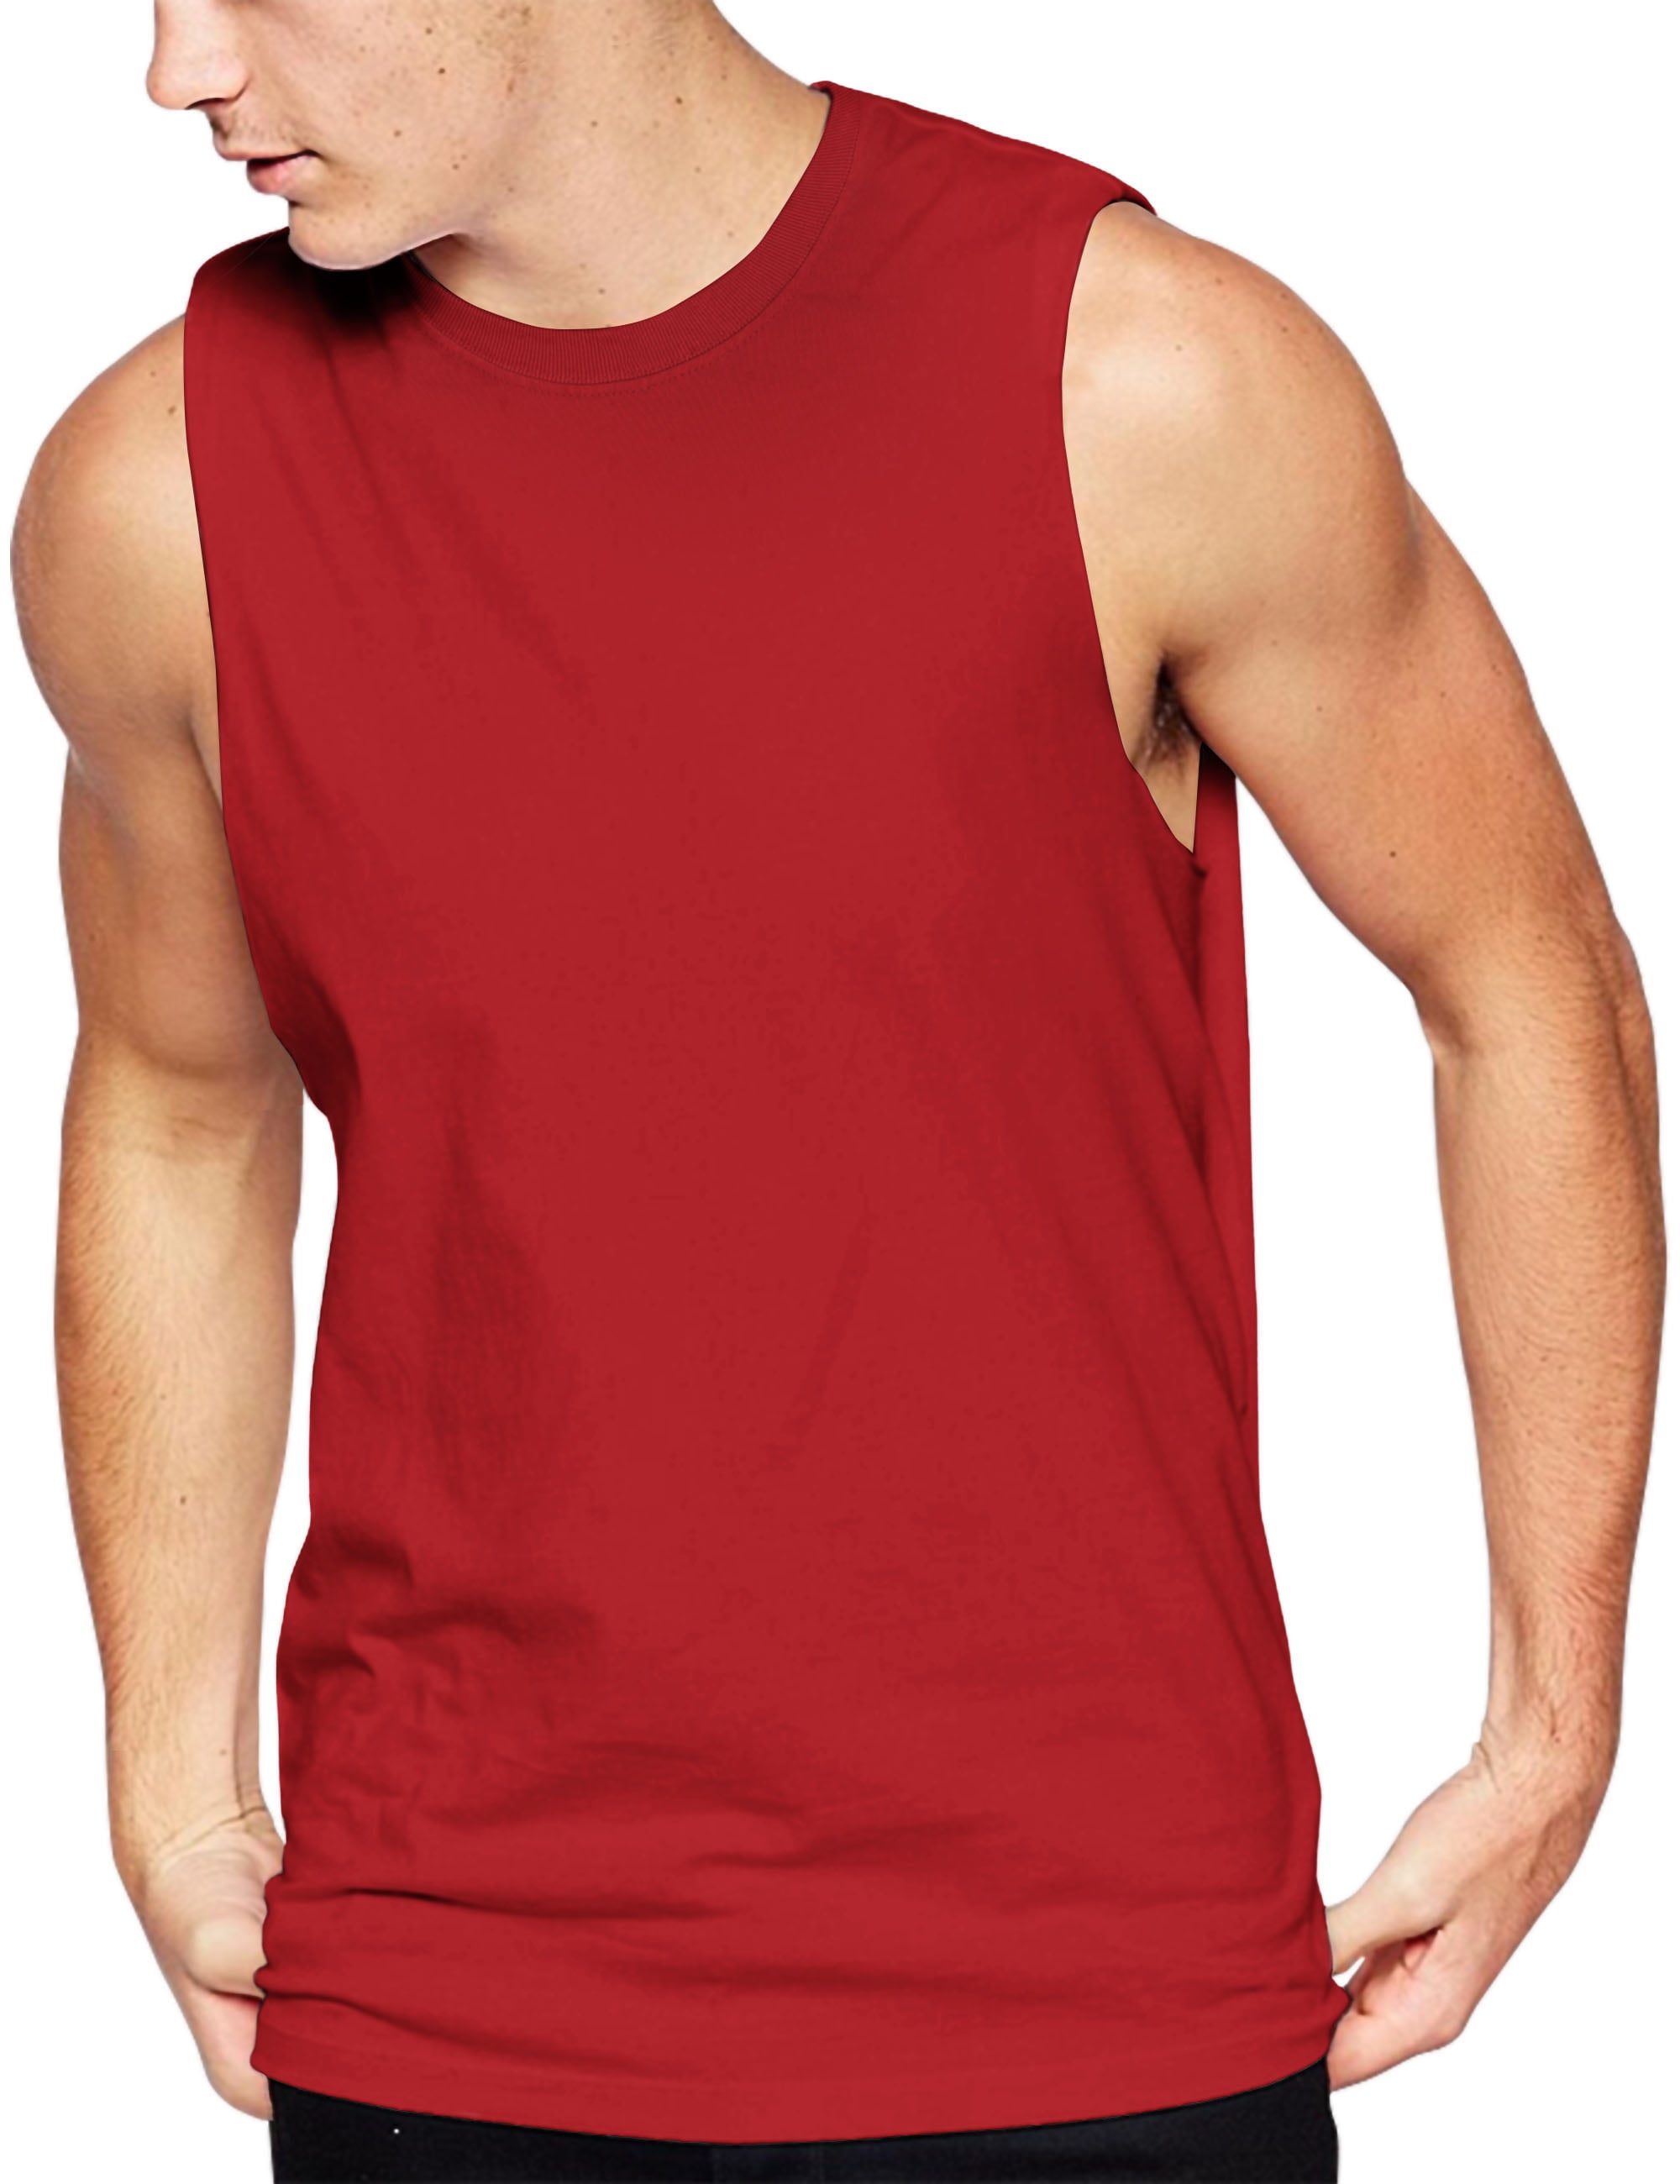 Men's sleeveless shirt Tie Dye peace sign decal design muscle tee tank top 